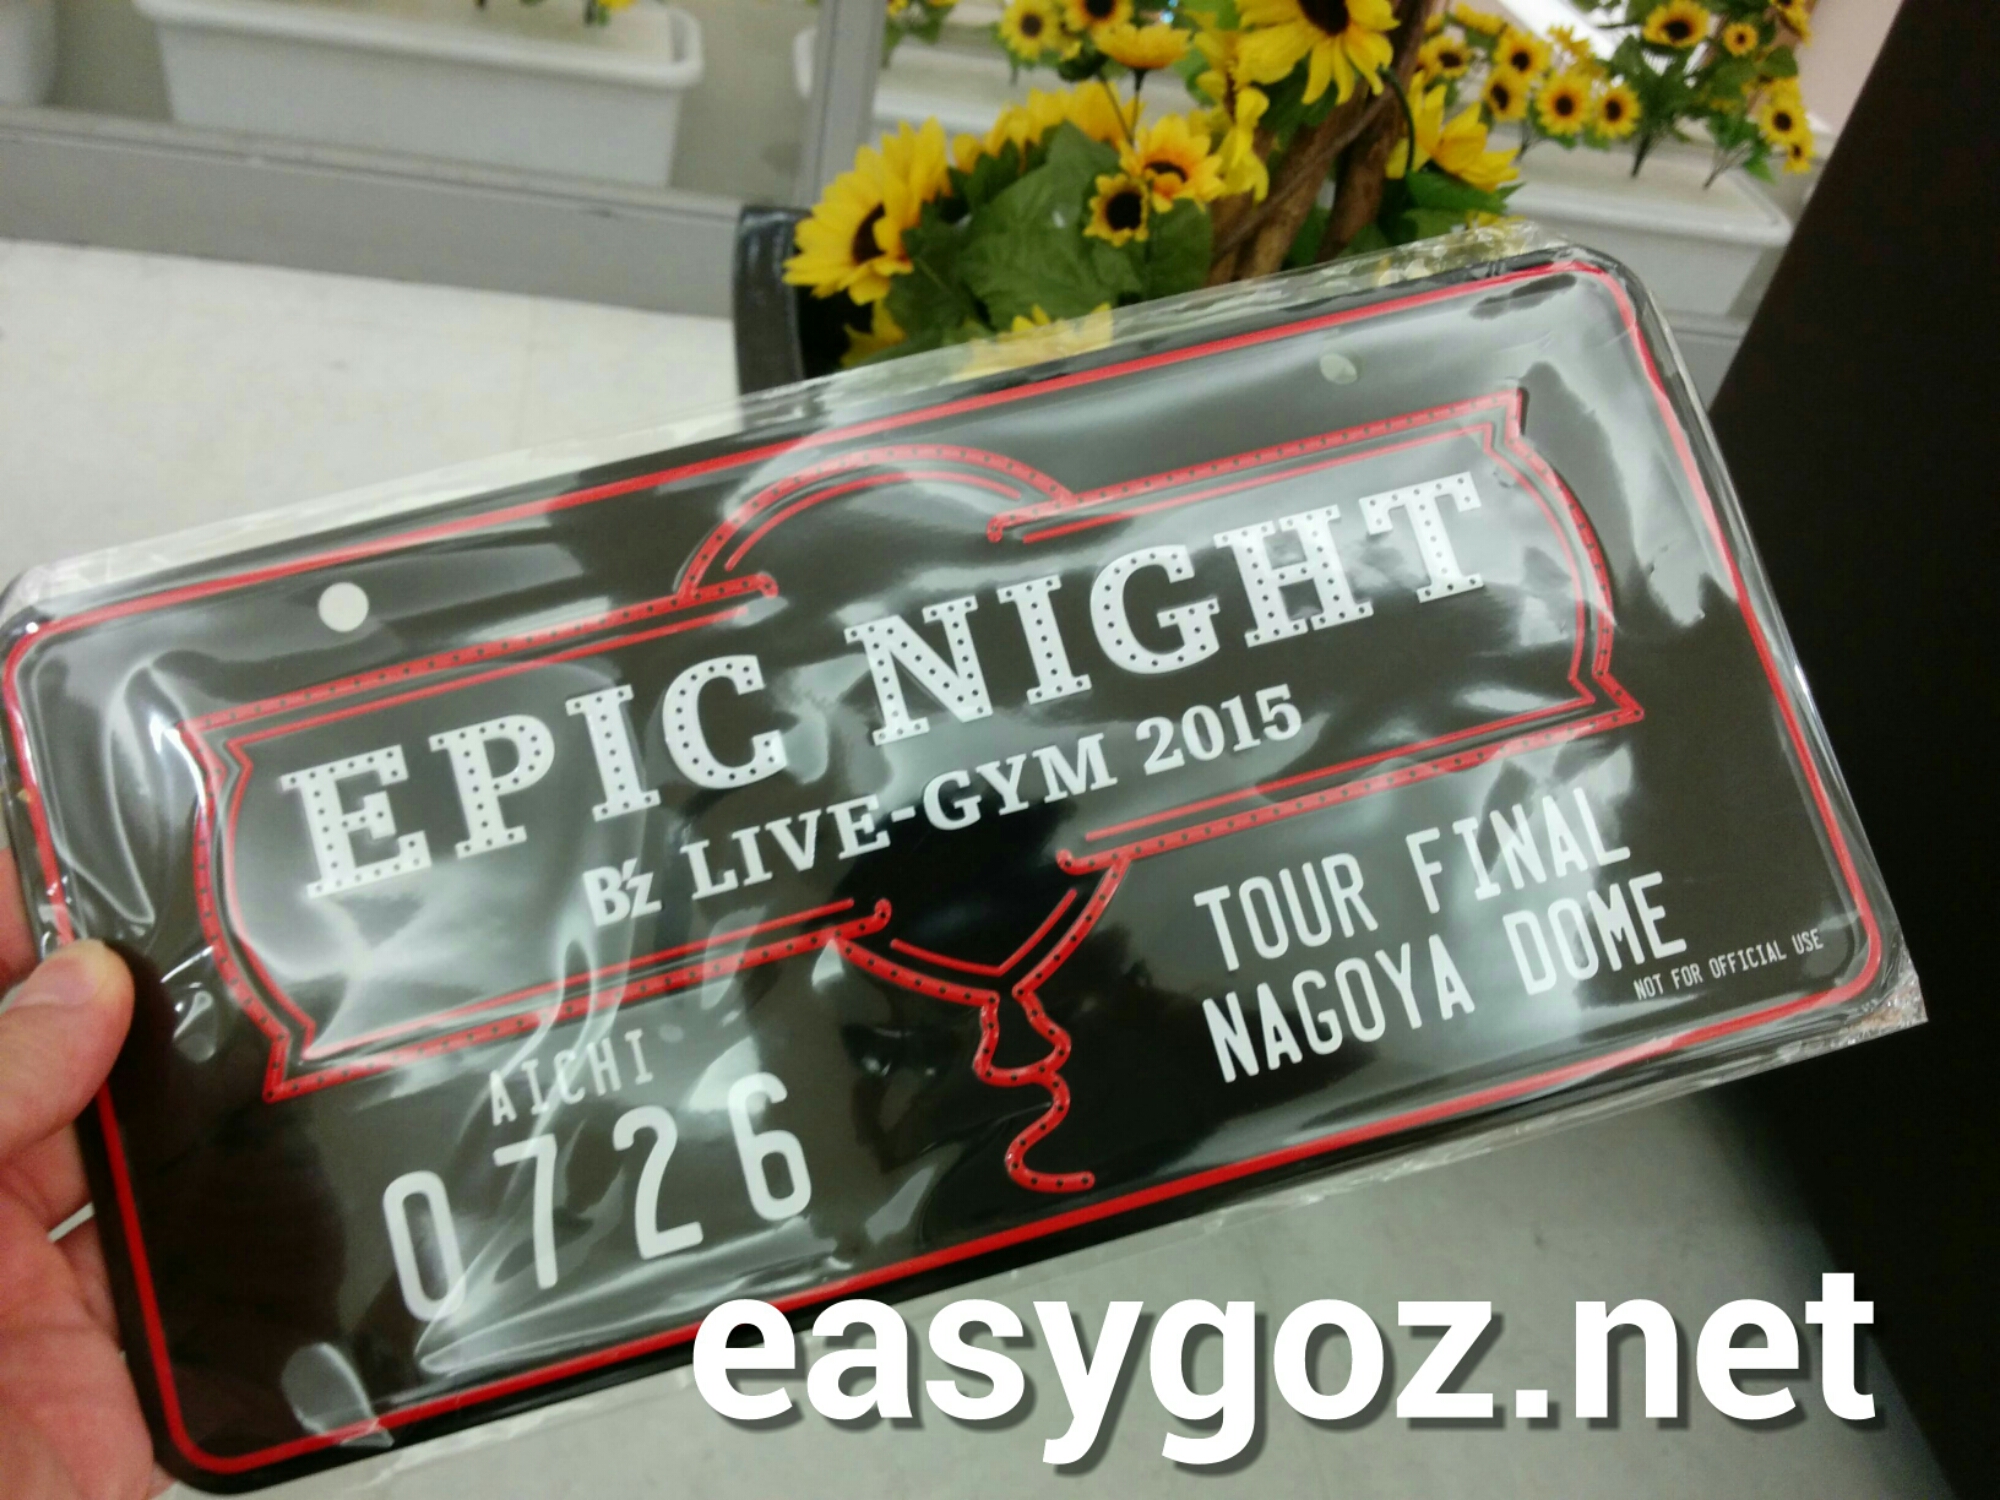 B'z LIVE-GYM 2015 -EPIC NIGHT-」ナゴヤドーム2日目・千秋楽セット 